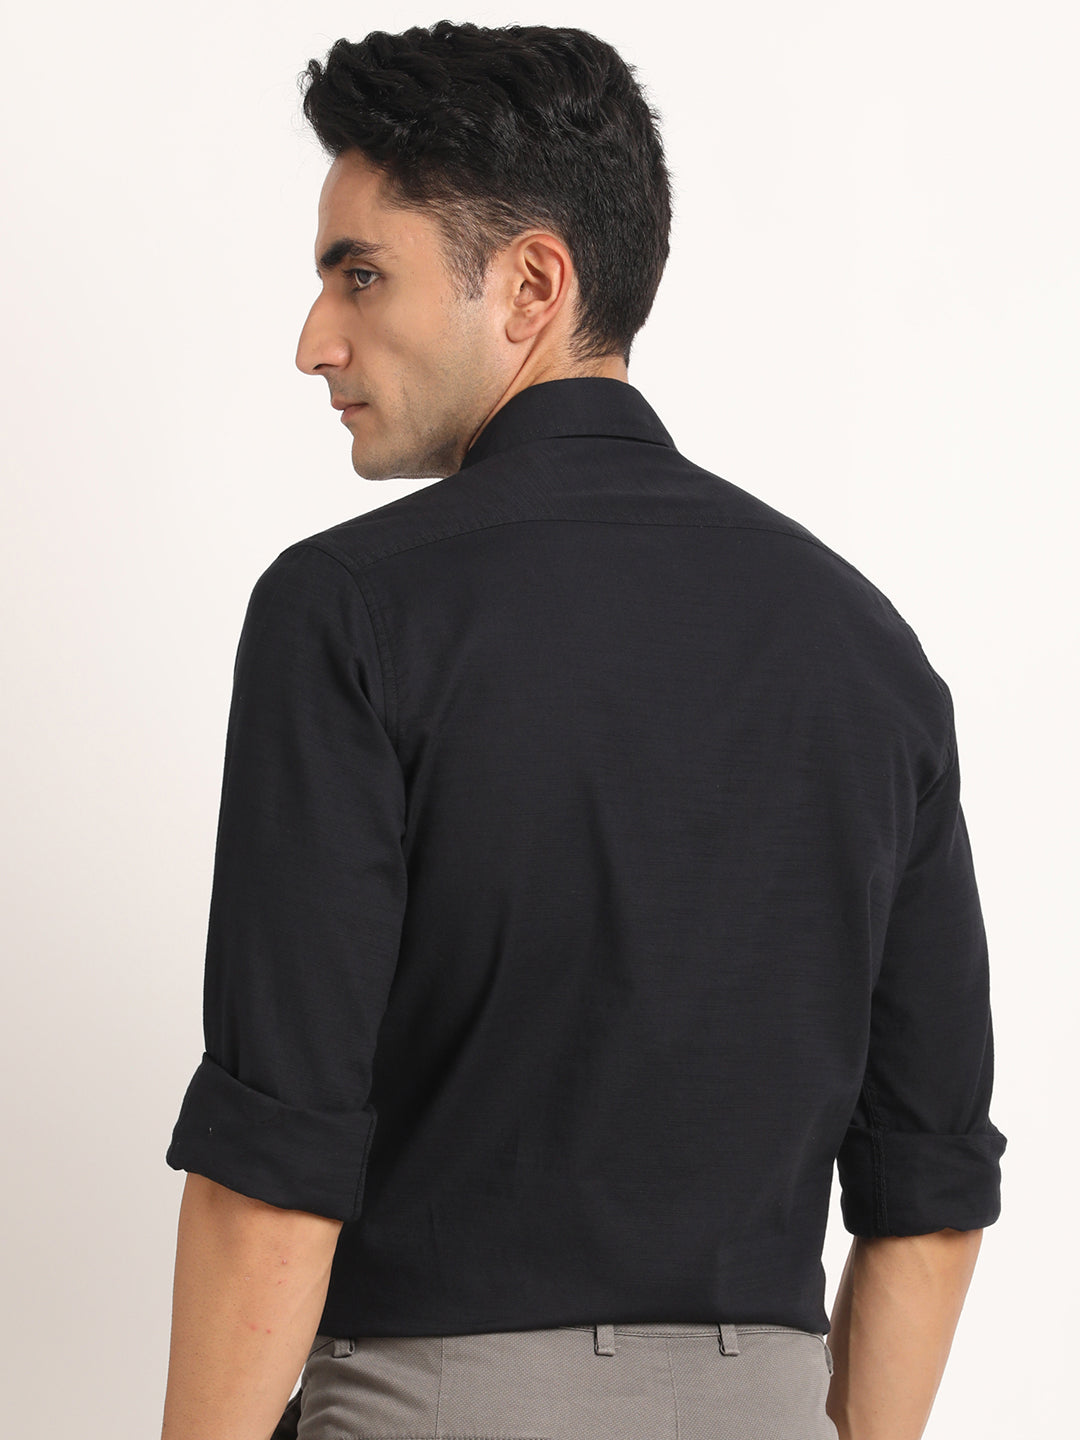 100% Cotton Black Plain Slim Fit Full Sleeve Casual Shirt